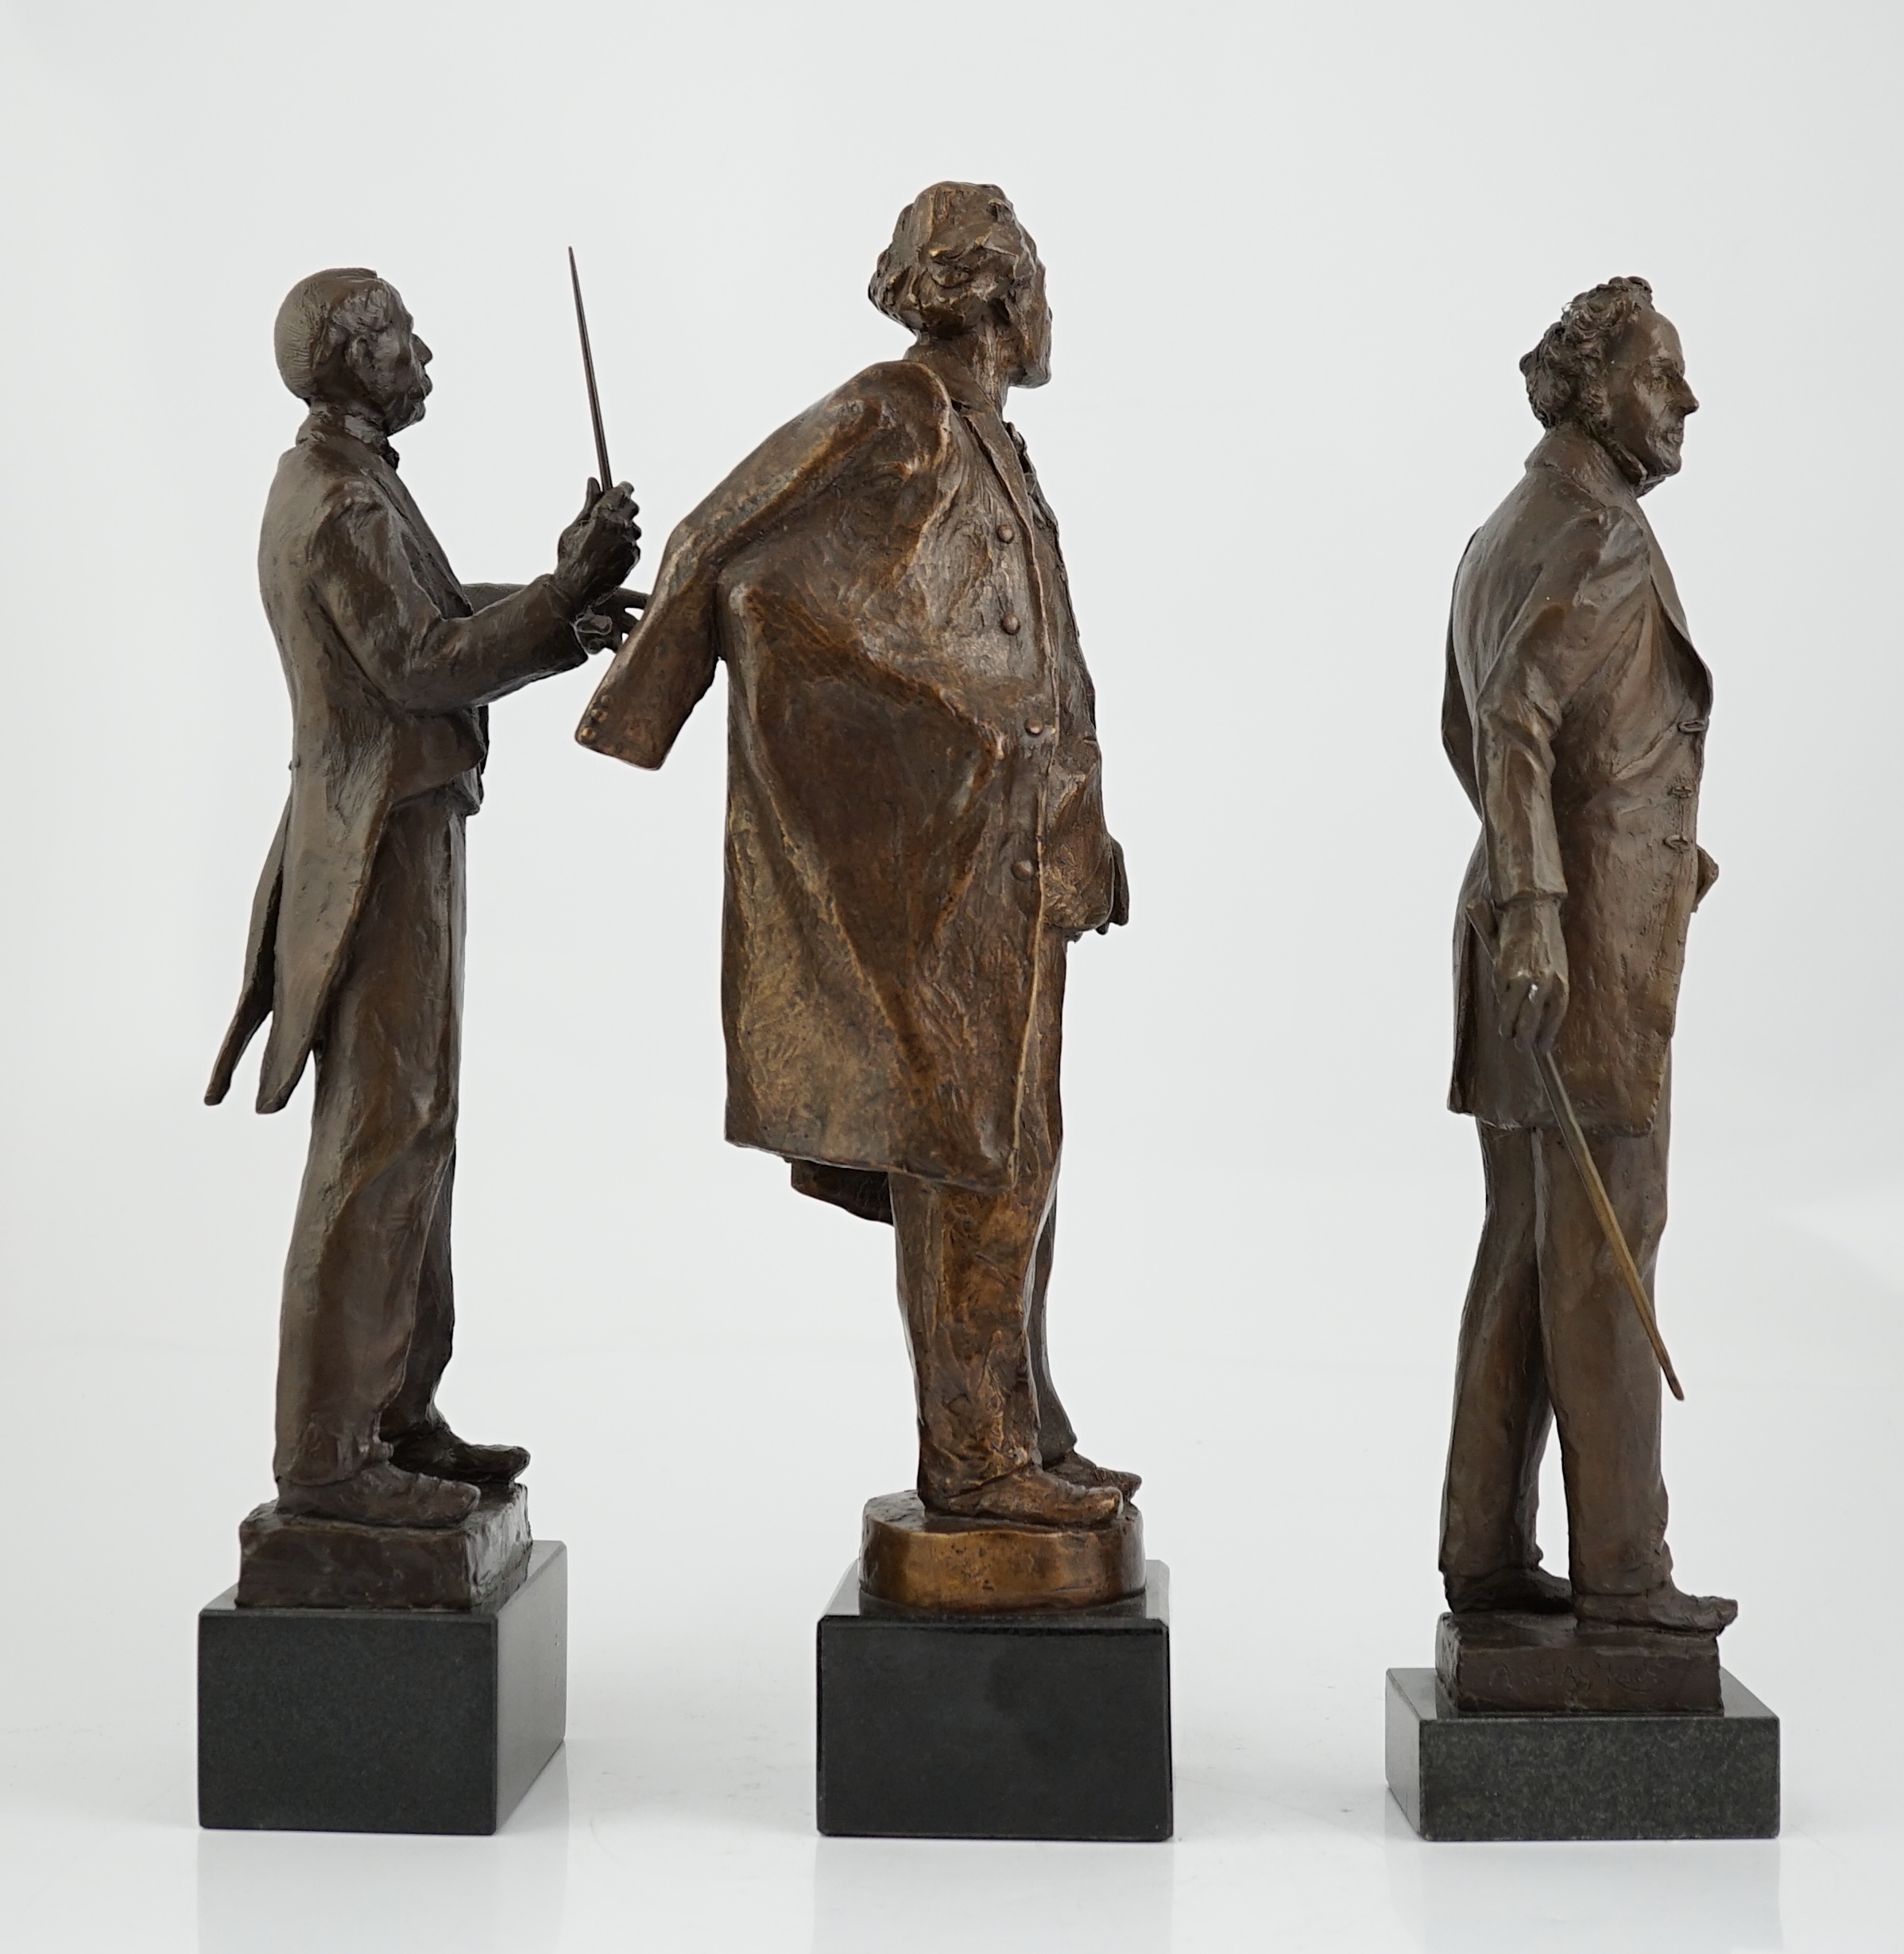 Anthony Hawken FRSS (British, b.1948), three bronze figures of composers, Gustav Mahler, Sir Edward Elgar and Mendelssohn